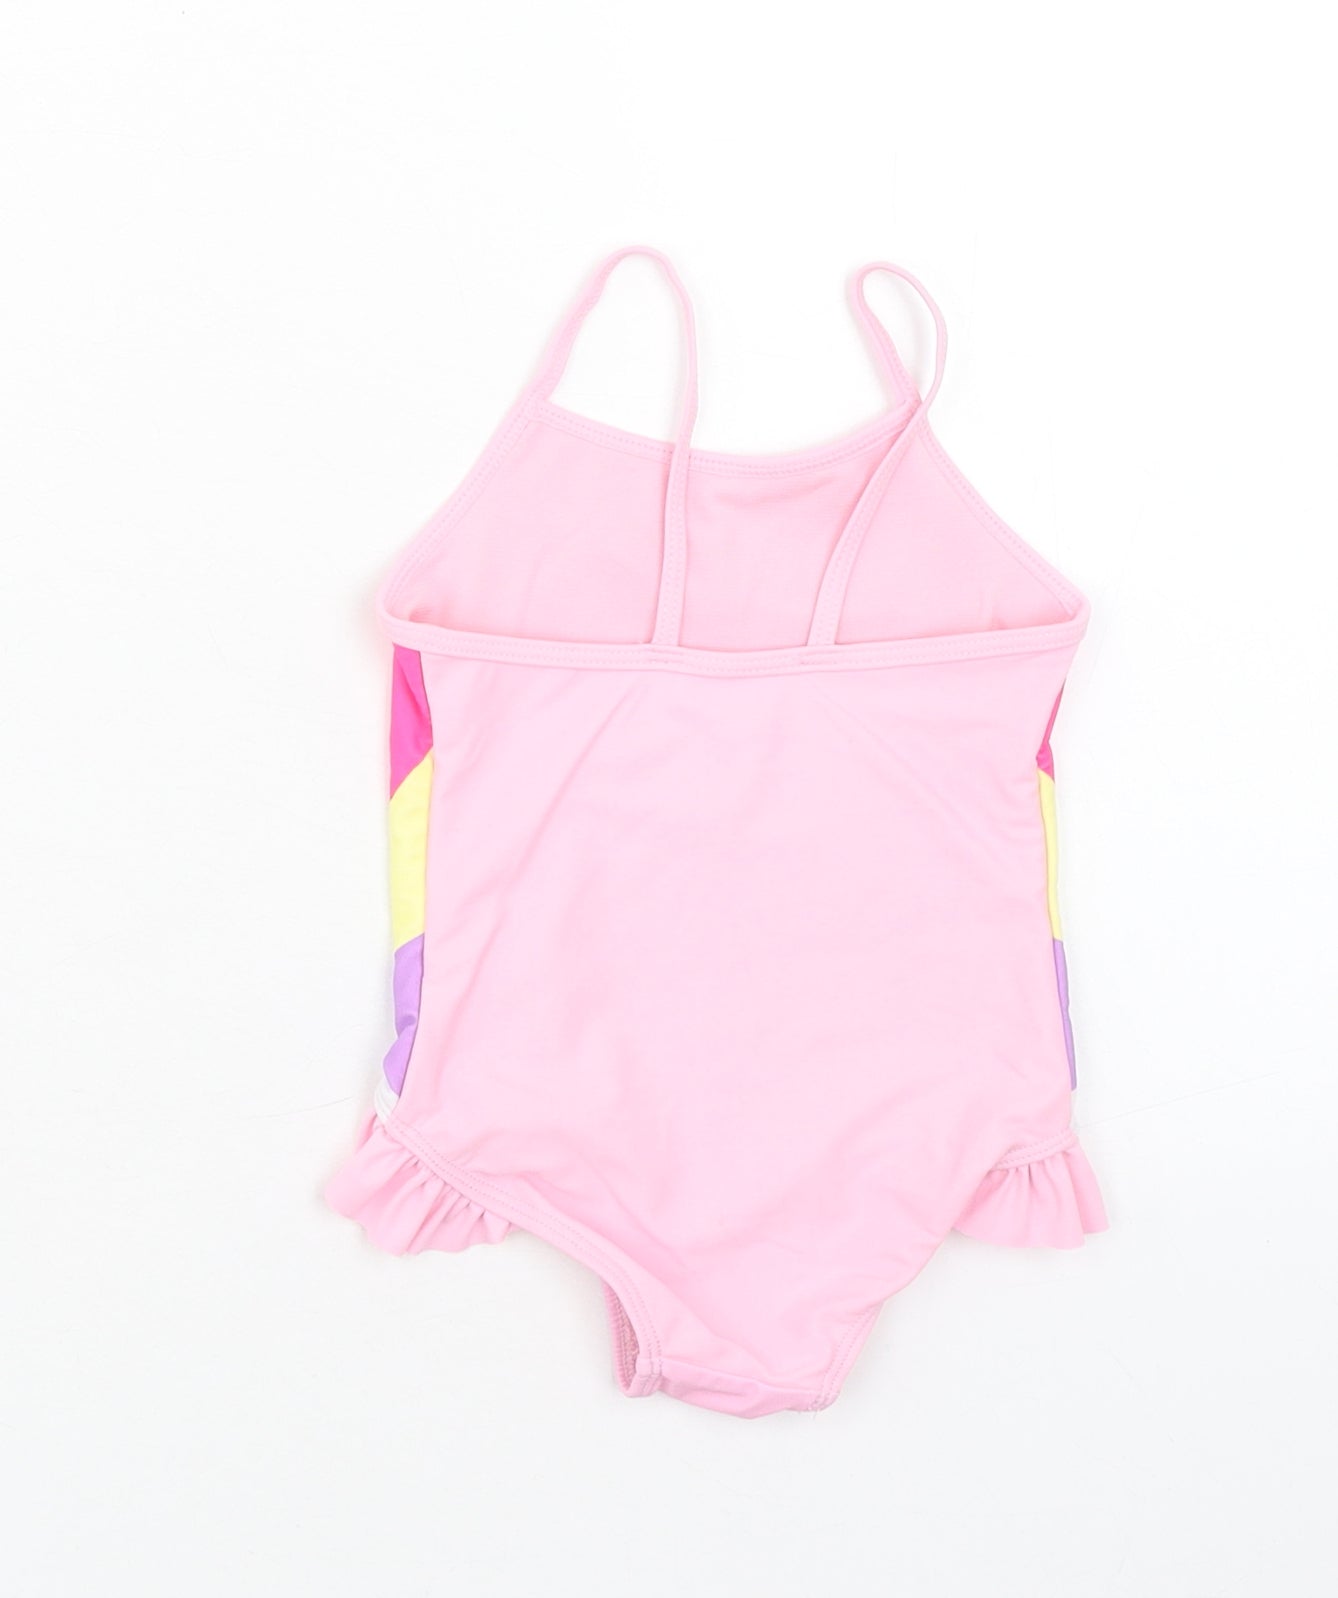 Matalan Girls Pink Geometric Polyester Unitard One-Piece Size 6-9 Months Pullover - Swimsuit, Unicorn Print